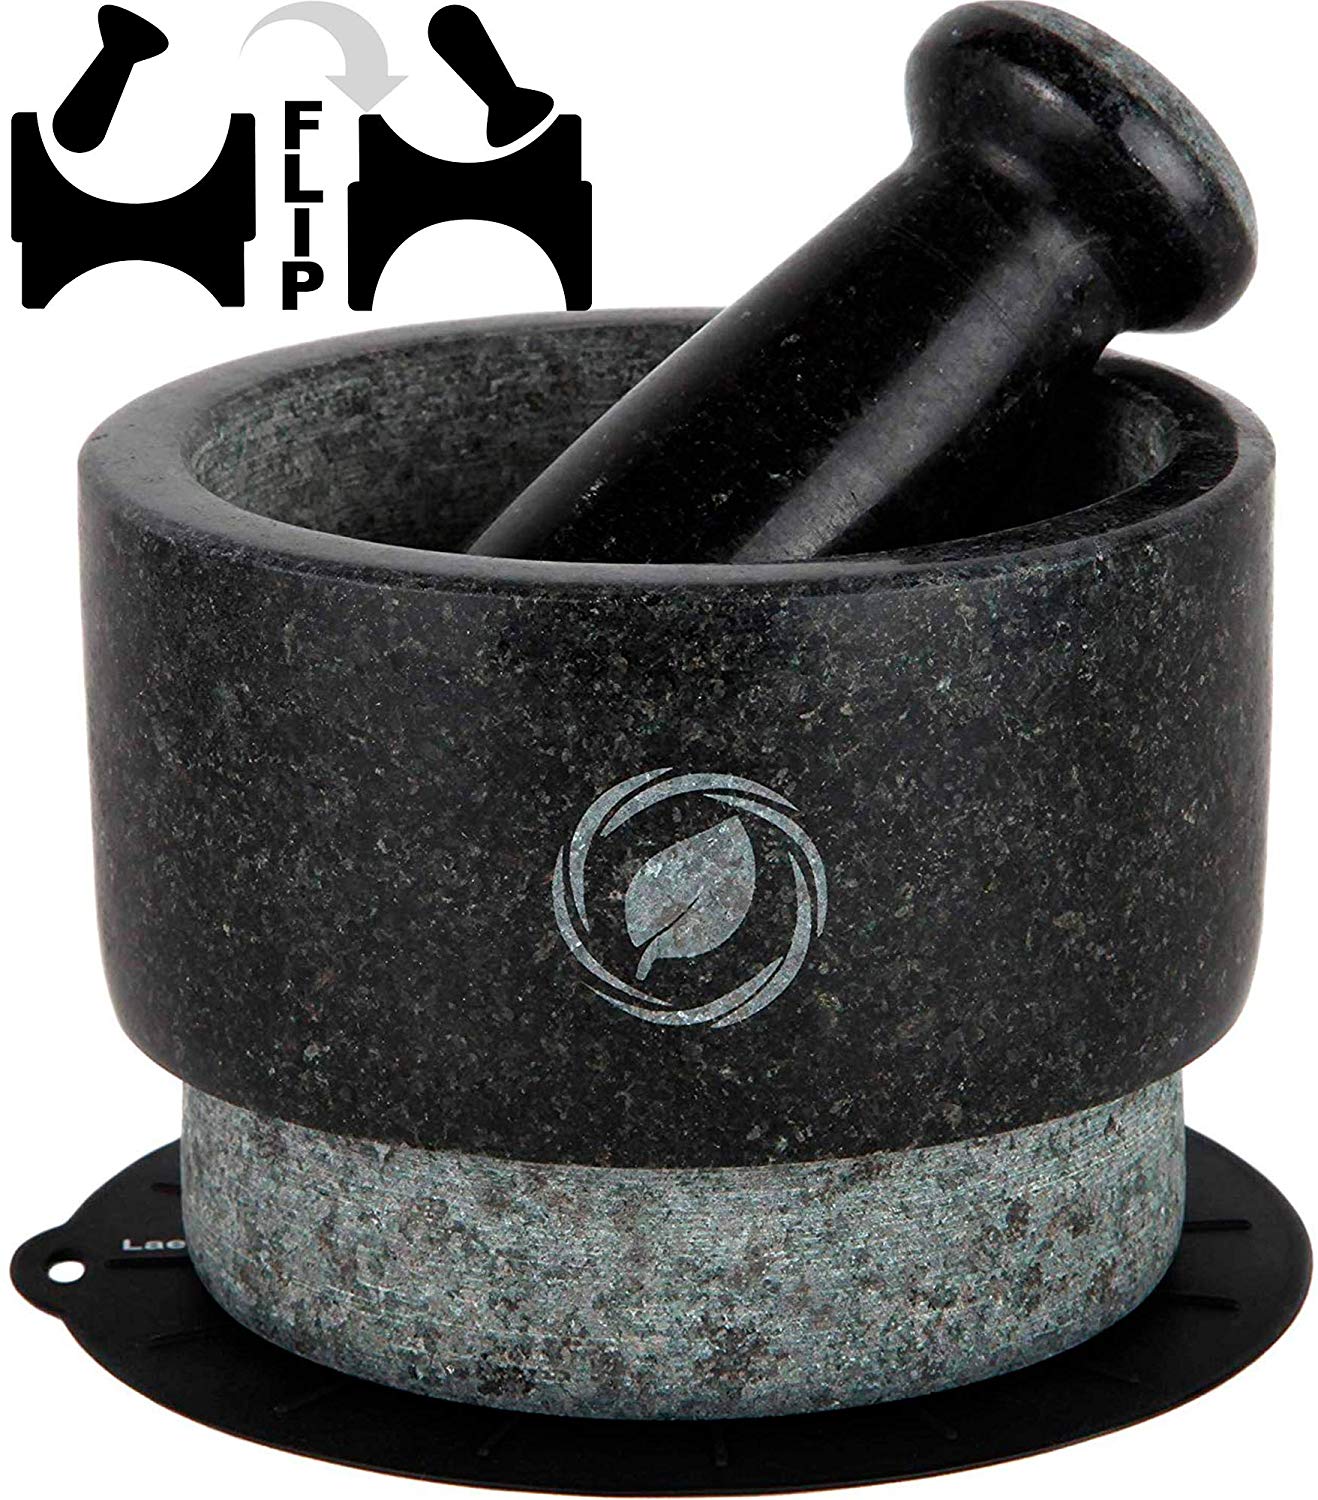 https://www.dontwasteyourmoney.com/wp-content/uploads/2019/12/laevo-cook-granite-mortar-and-pestle-set-mortar-and-pestle.jpg